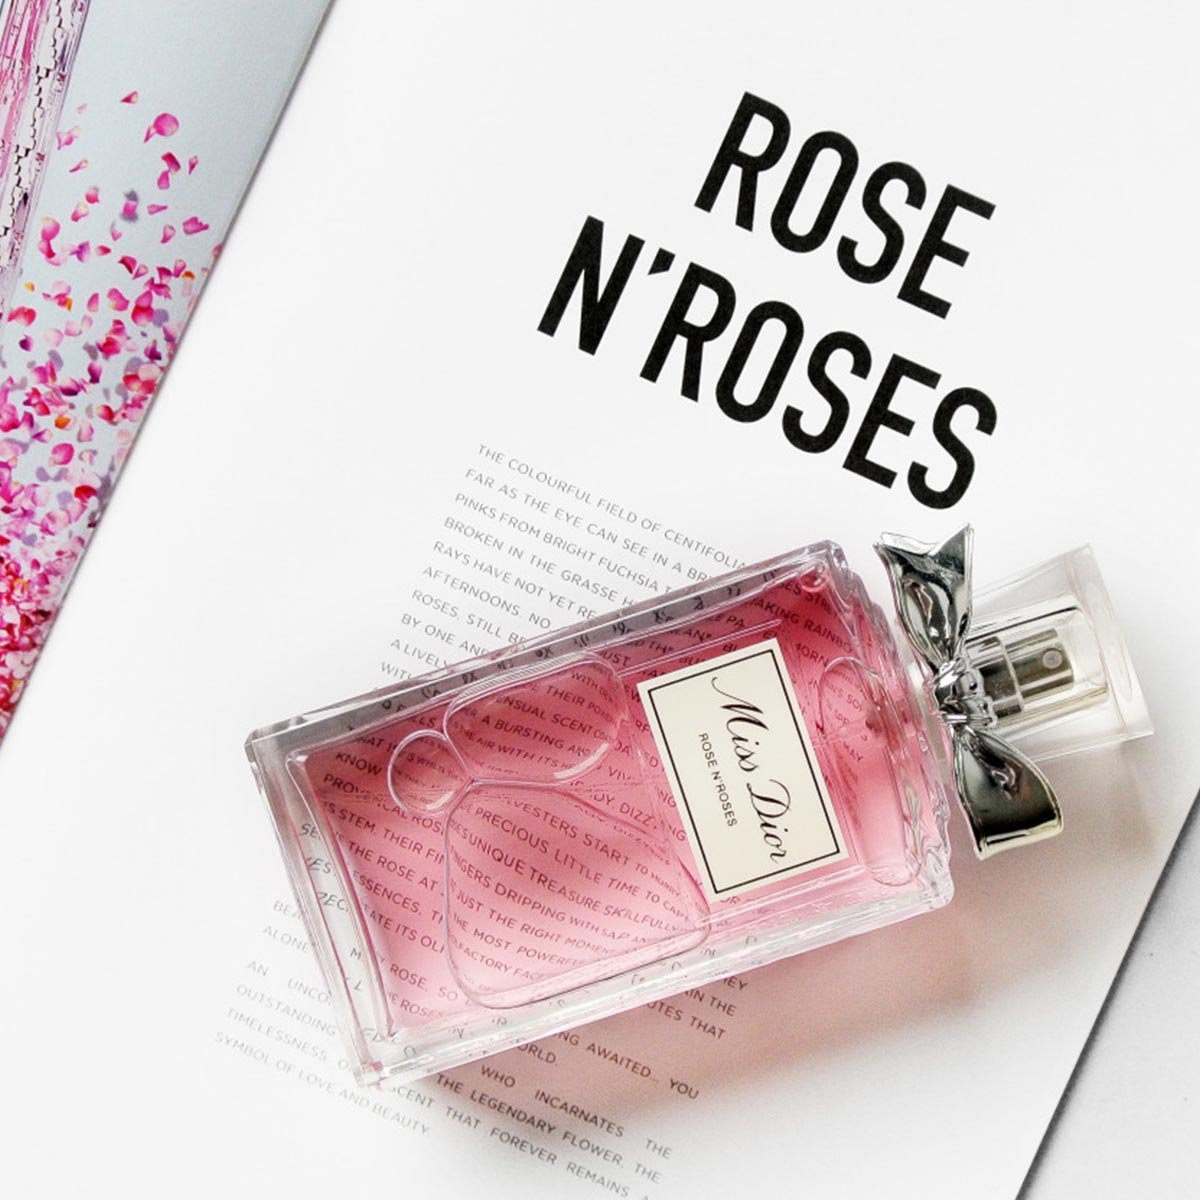 Dior Miss Dior Roses N'Roses EDT - My Perfume Shop Australia